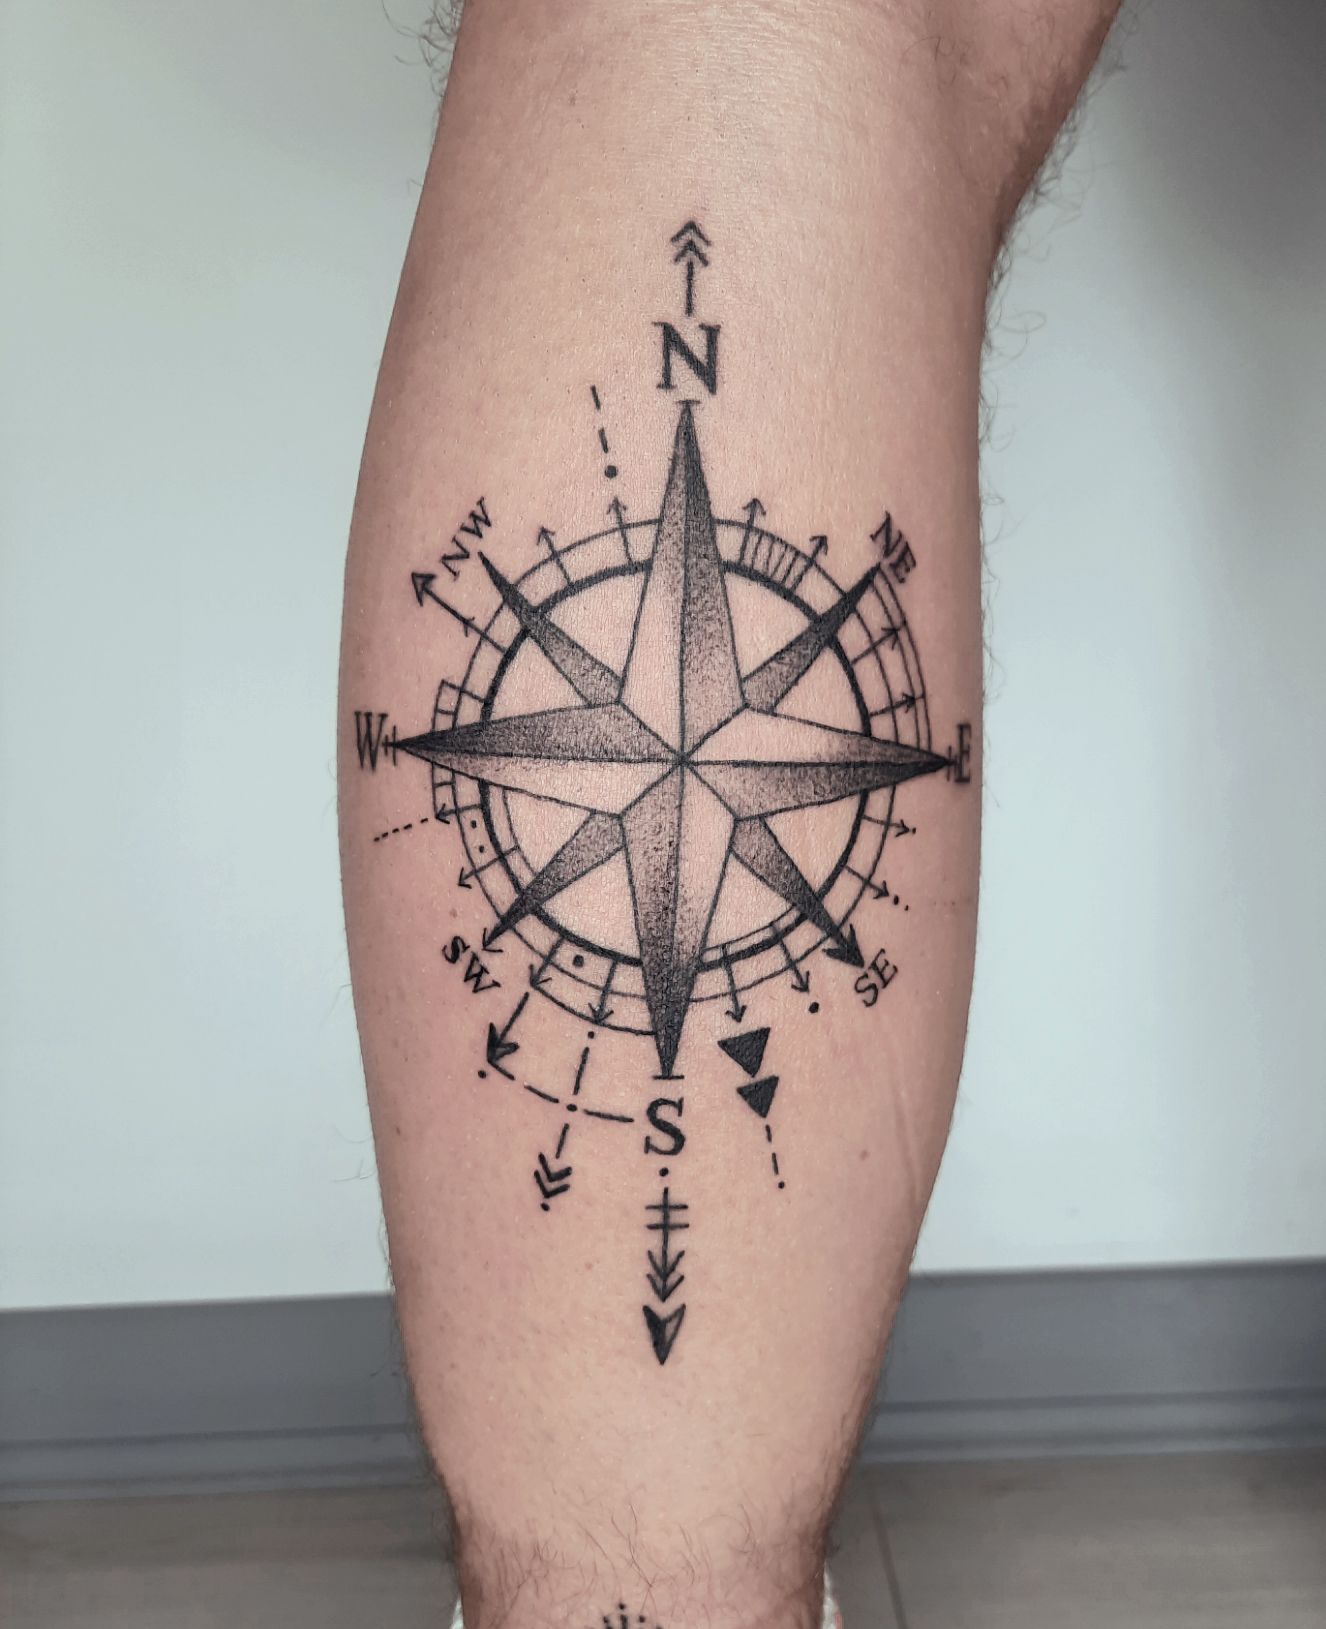 Tattoo uploaded by Vipul Chaudhary • Compass tattoo |Compass tattoo design |compass  tattoo with anchor • Tattoodo